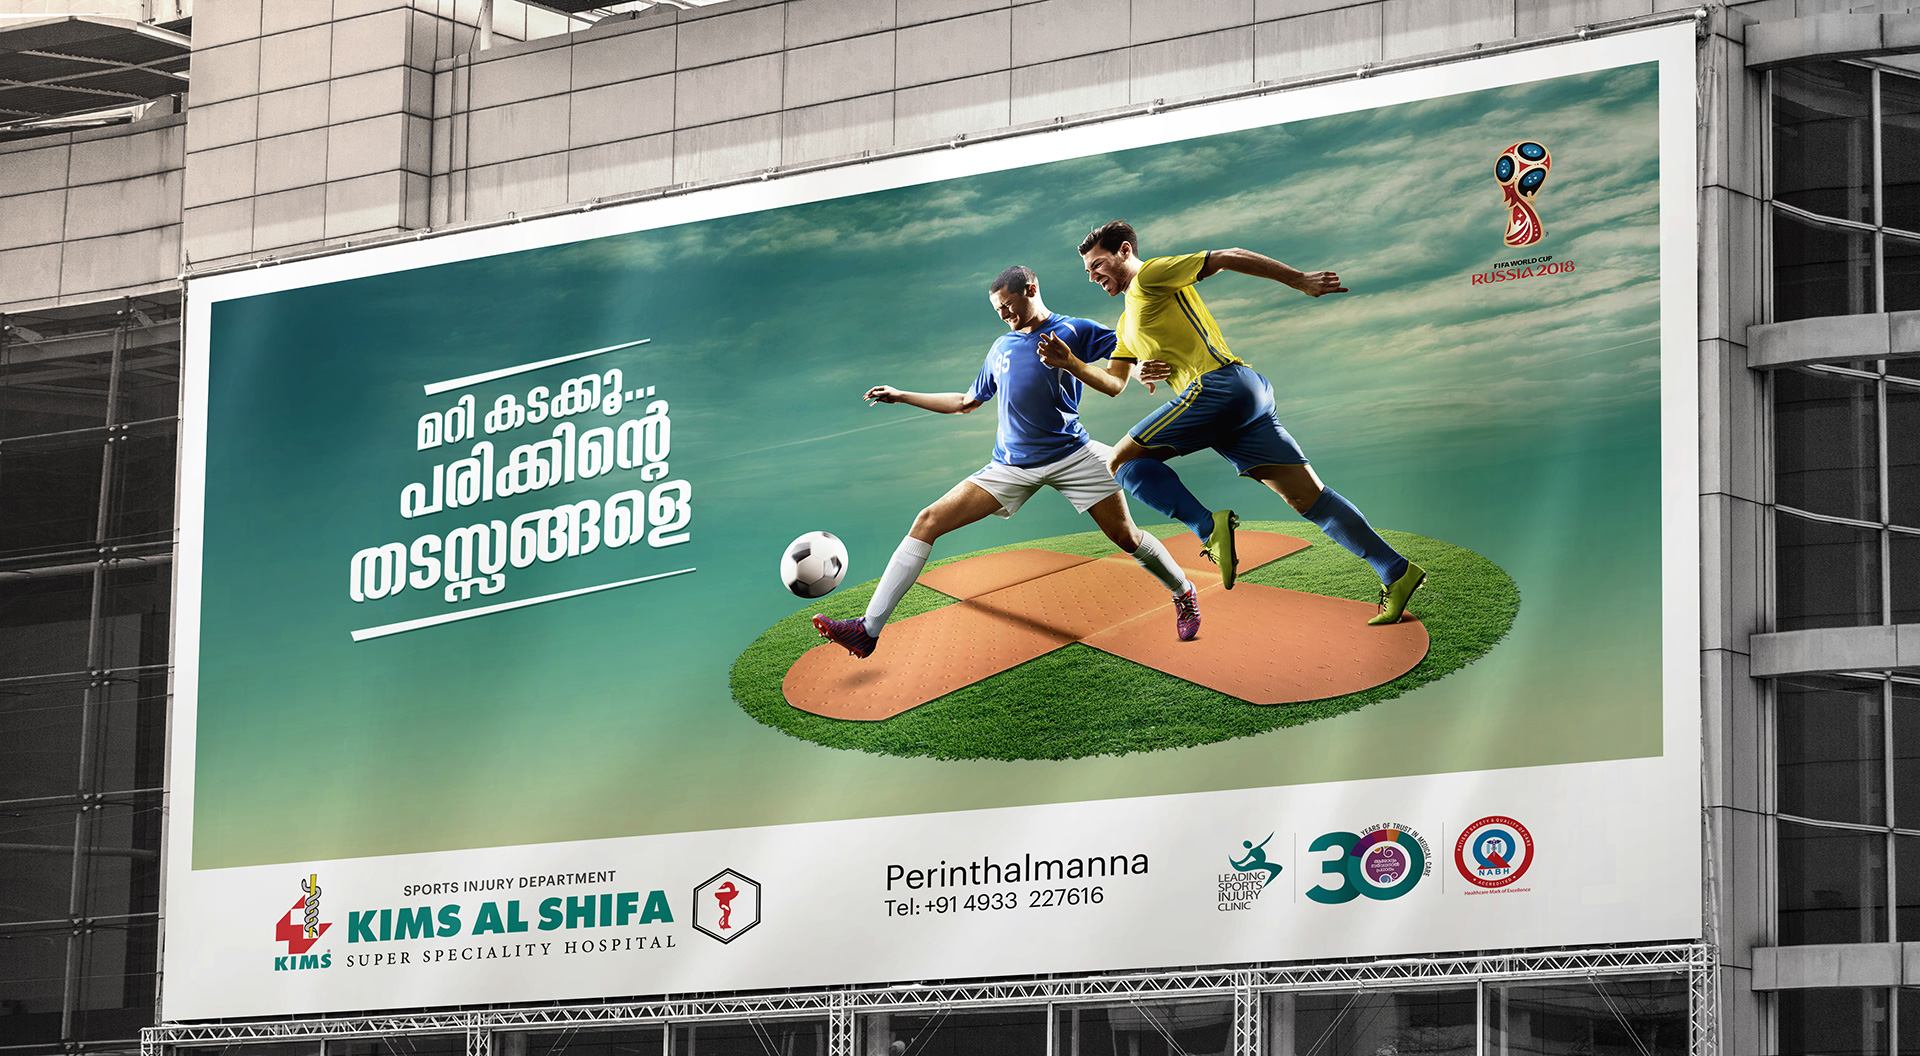 A billboard displays KIMS Al Shifa - Recover from the hurdles of Injury design